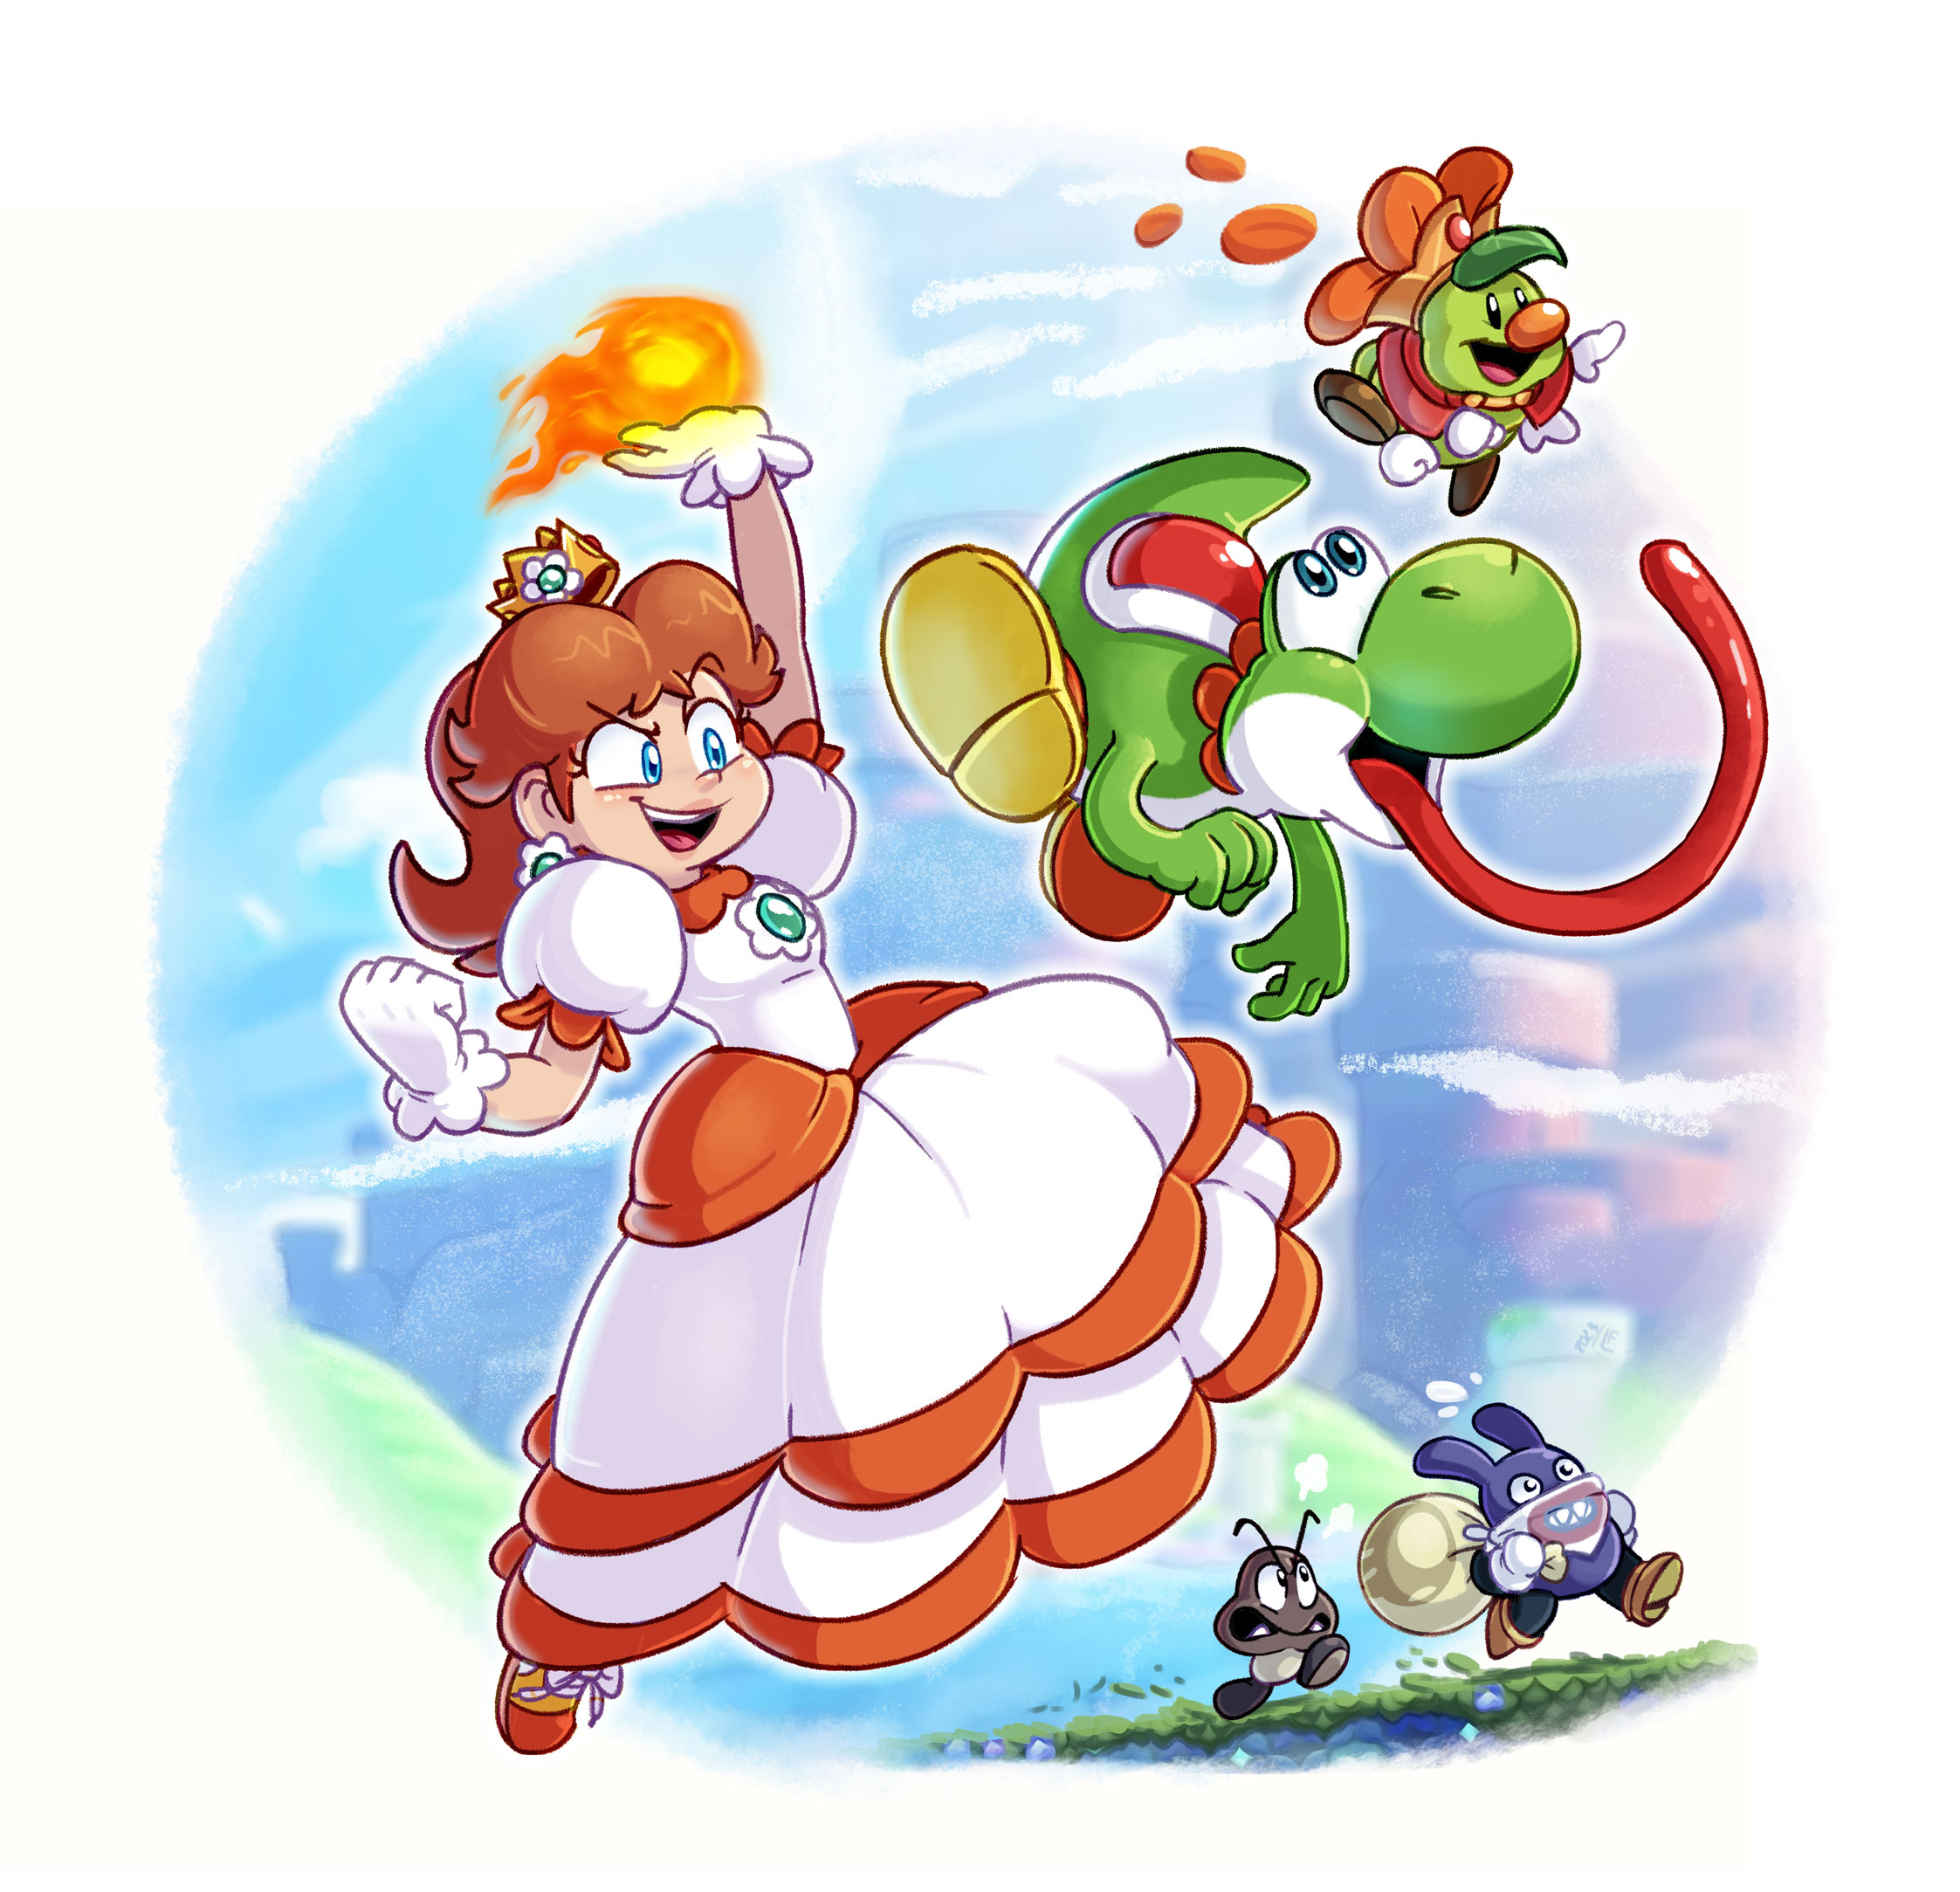 Daisy At Super Mario Wonder by MrRaheemRollair on DeviantArt